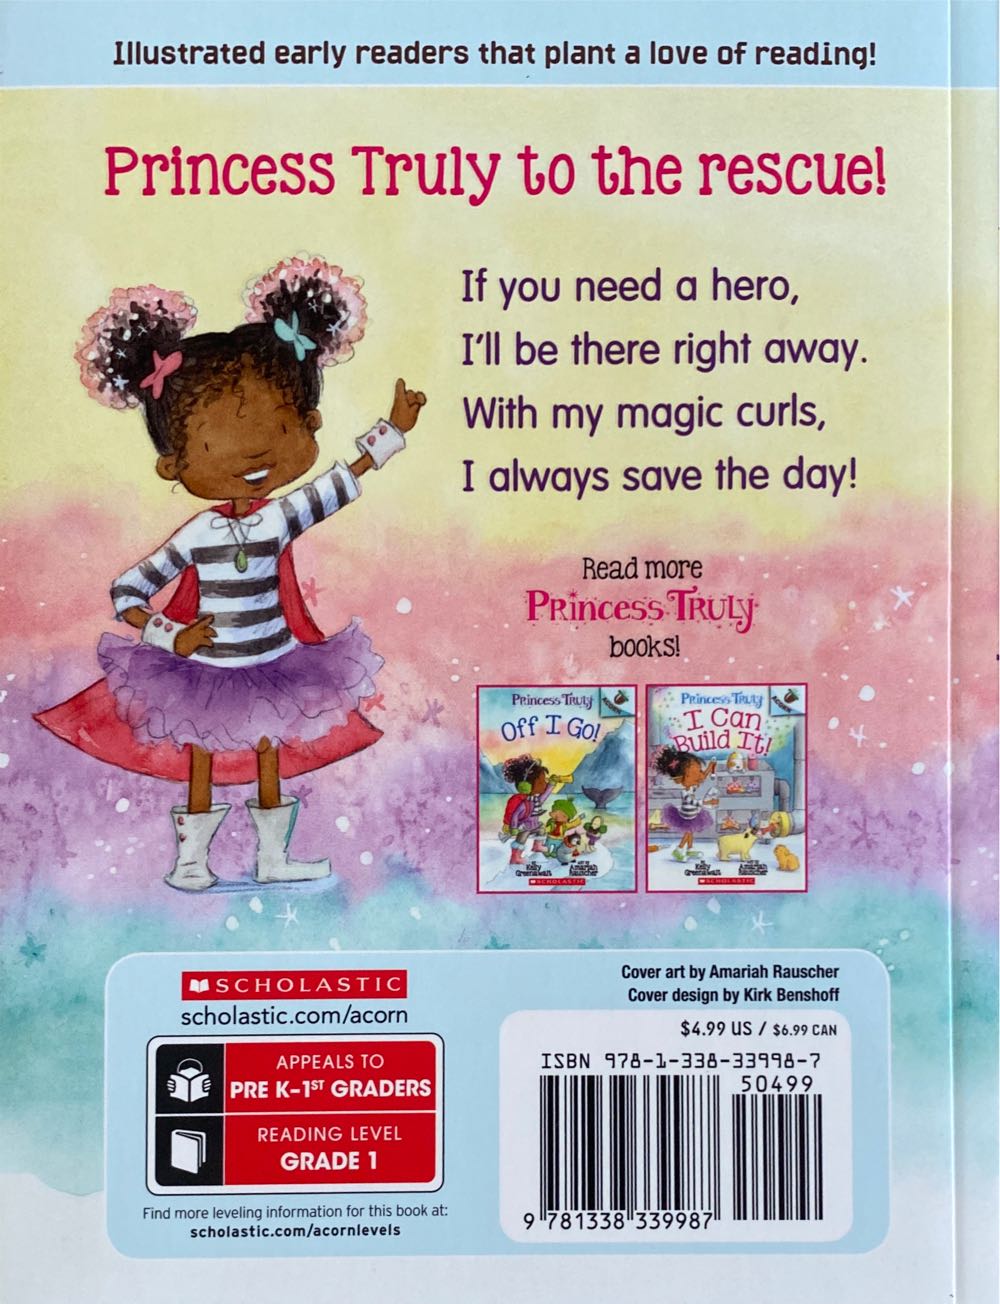 I Am a Super Girl! - Kelly Greenawalt (Princess Truly - Paperback) book collectible [Barcode 9781338339987] - Main Image 2